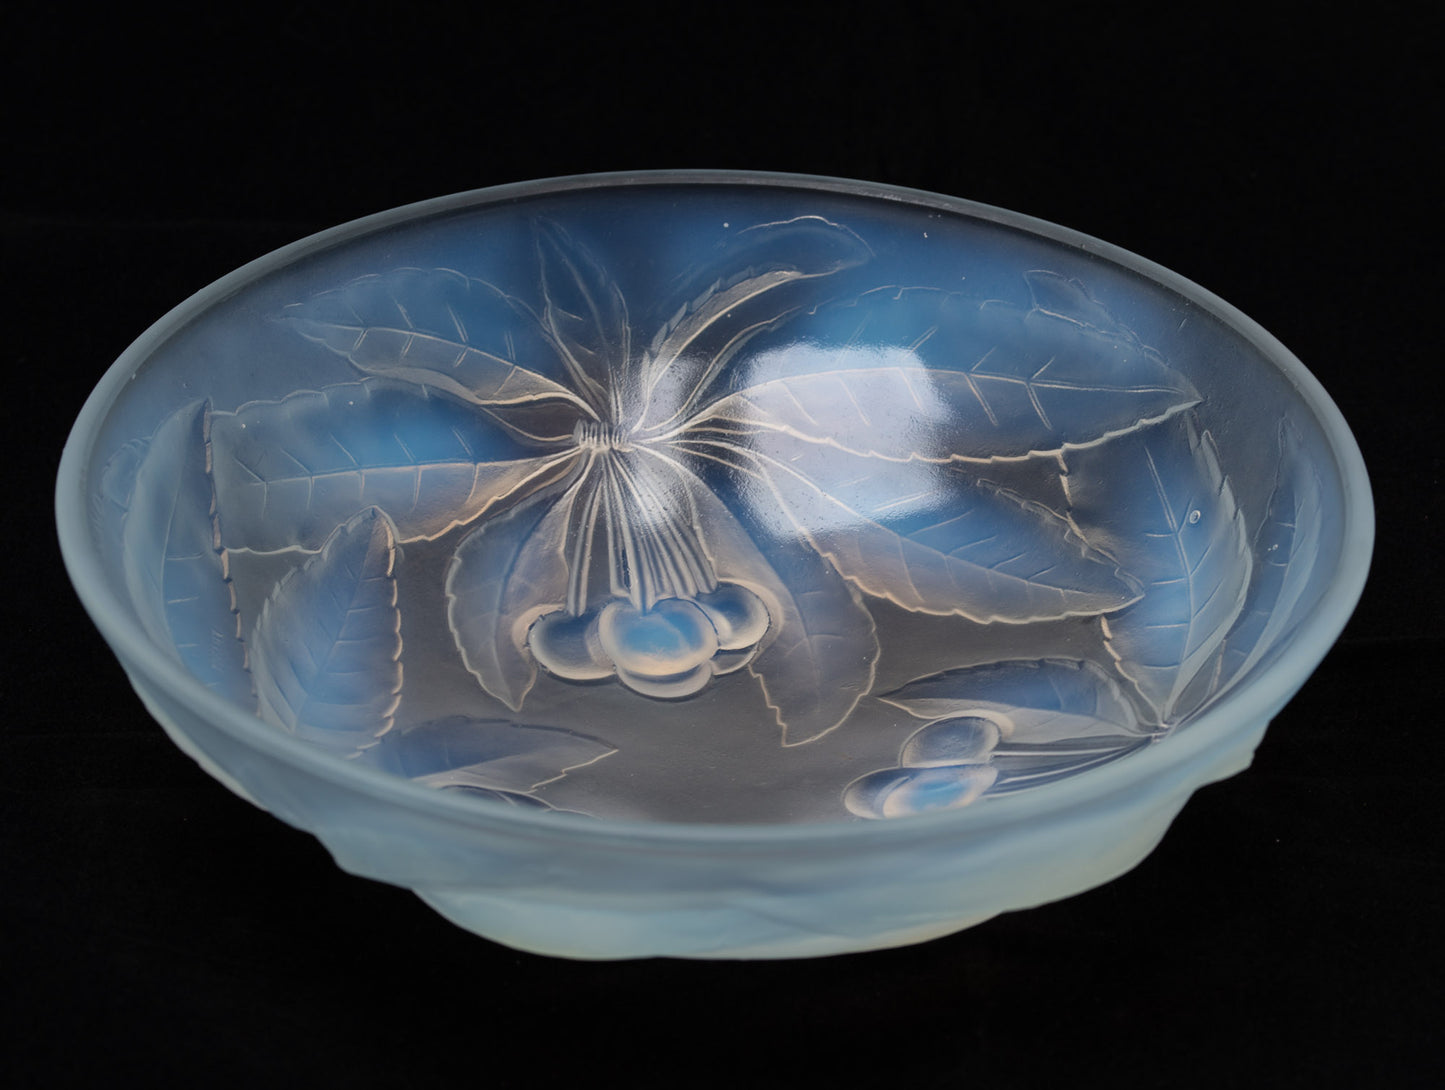 G Vallon Opalescent Glass Bowl Art Deco Period Cerises (Cherries) Design (3058)